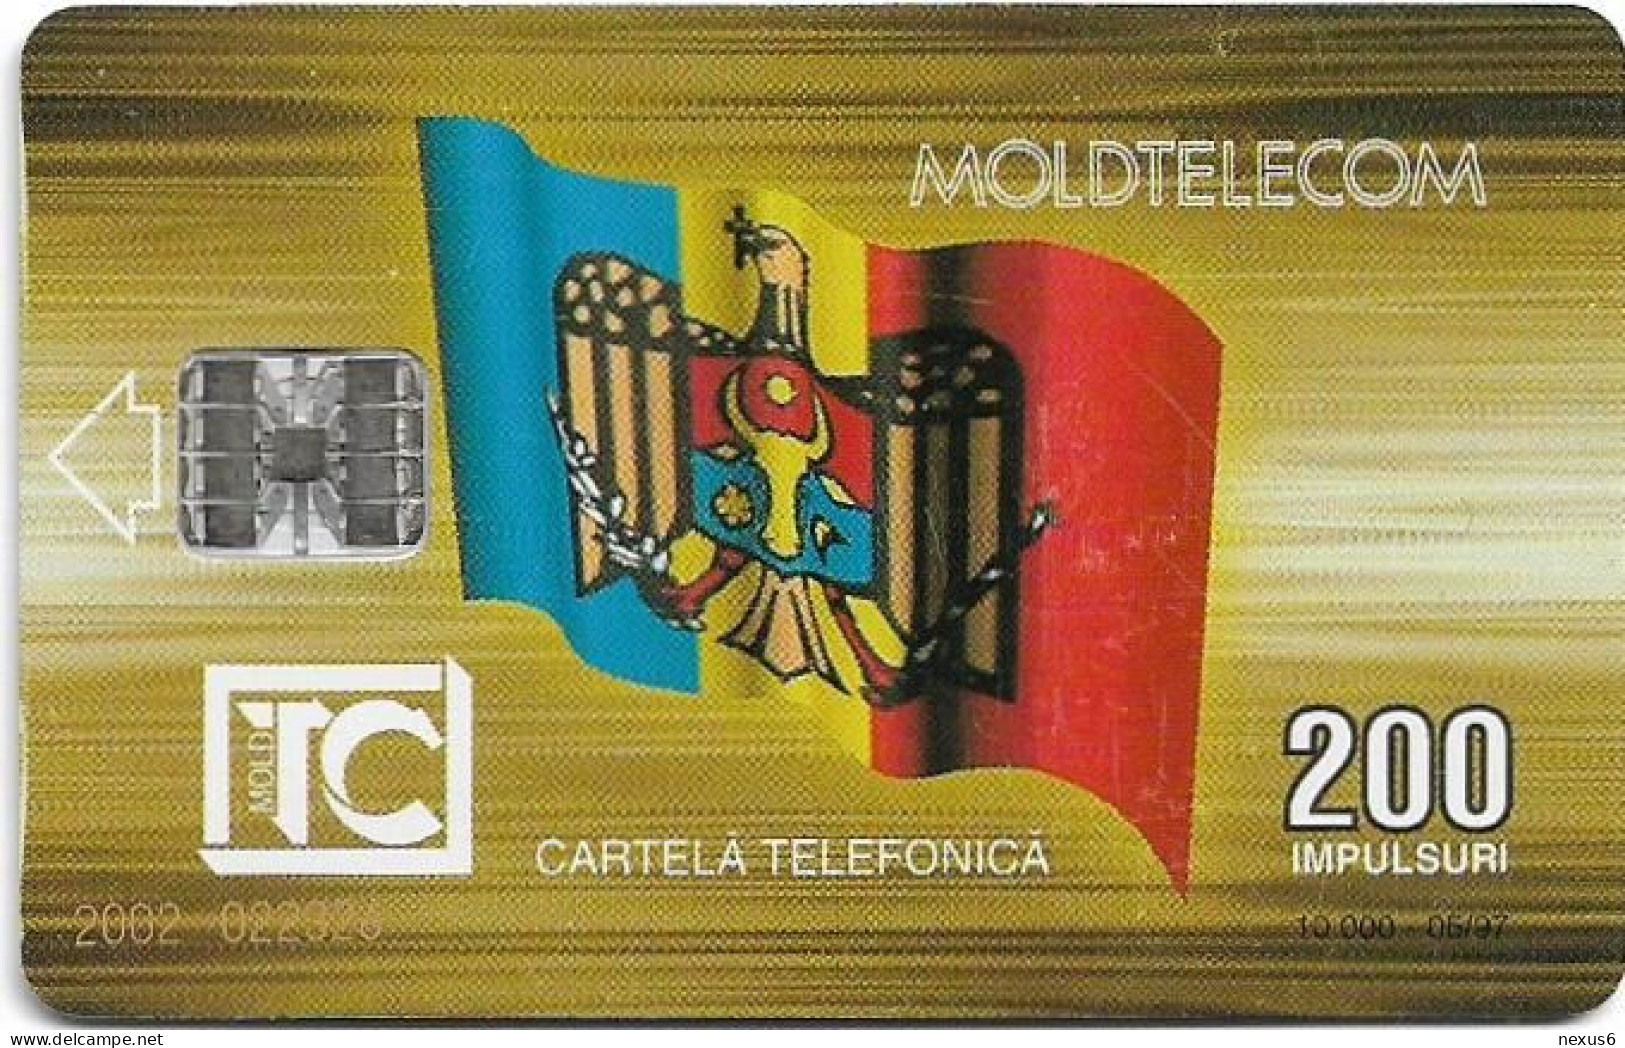 Moldova - Moldtelecom - Flag 3rd Issue, SC7, 05.1997, 200U, 10.000ex, Used - Moldavie